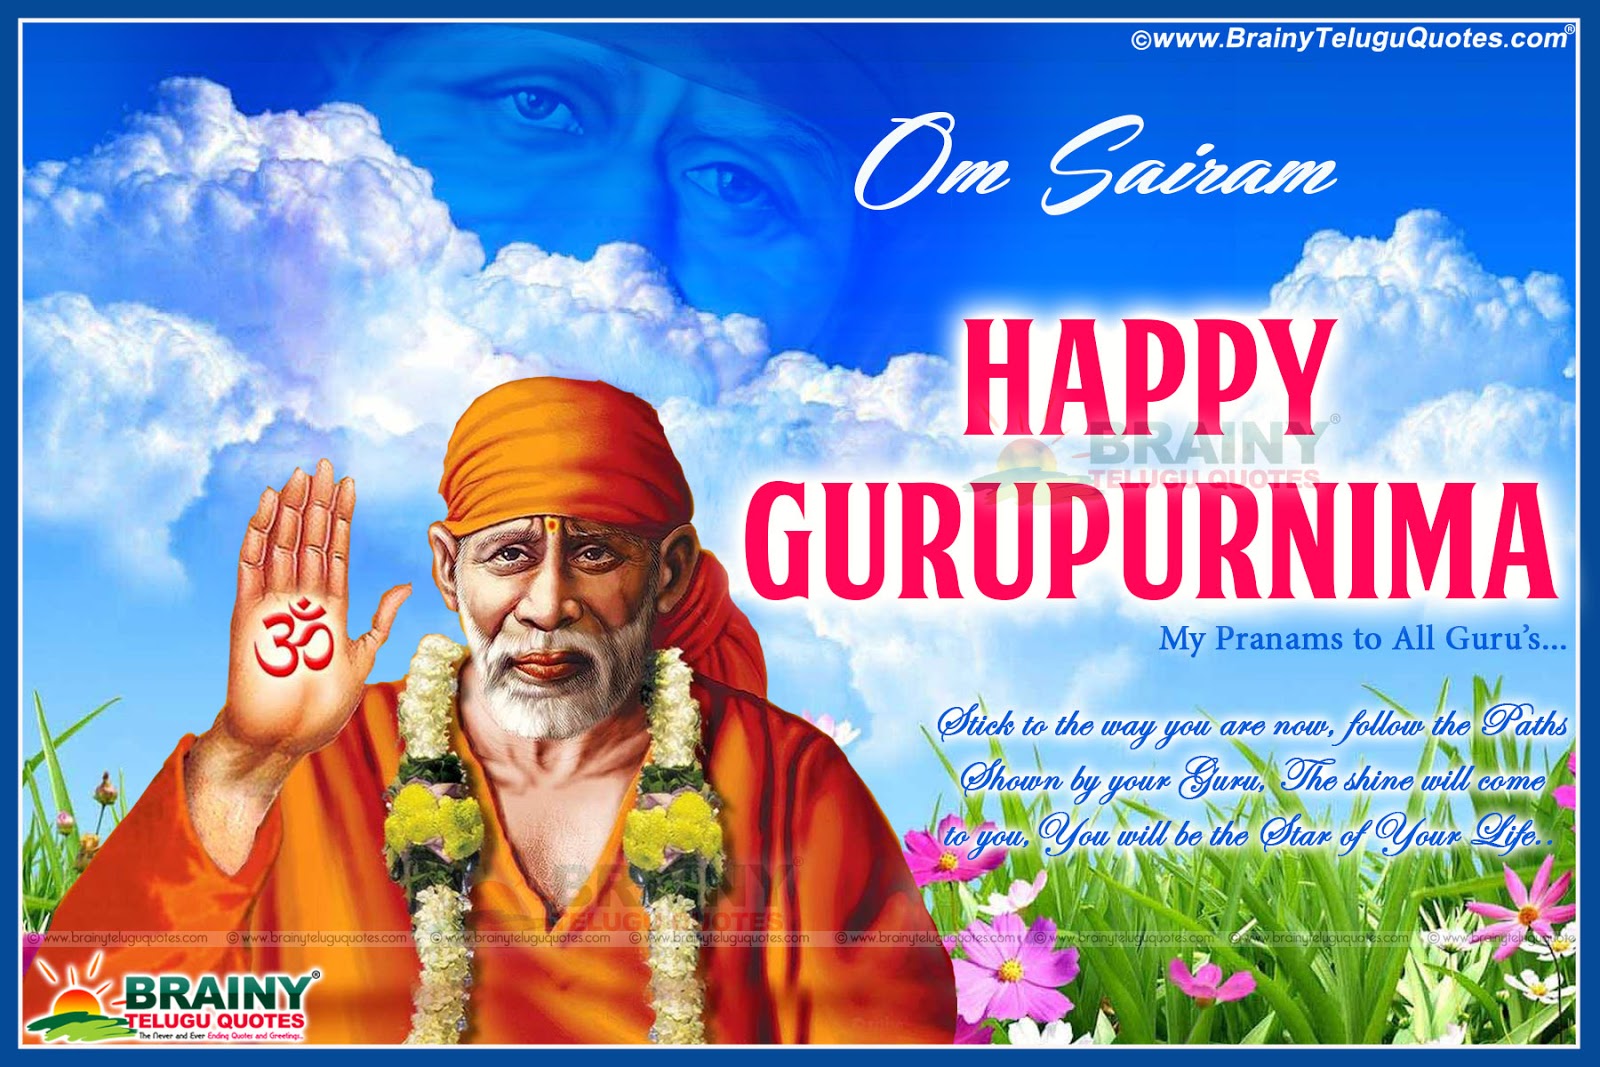 Happy Guru Purnima 2016 Wallpapers and messages online